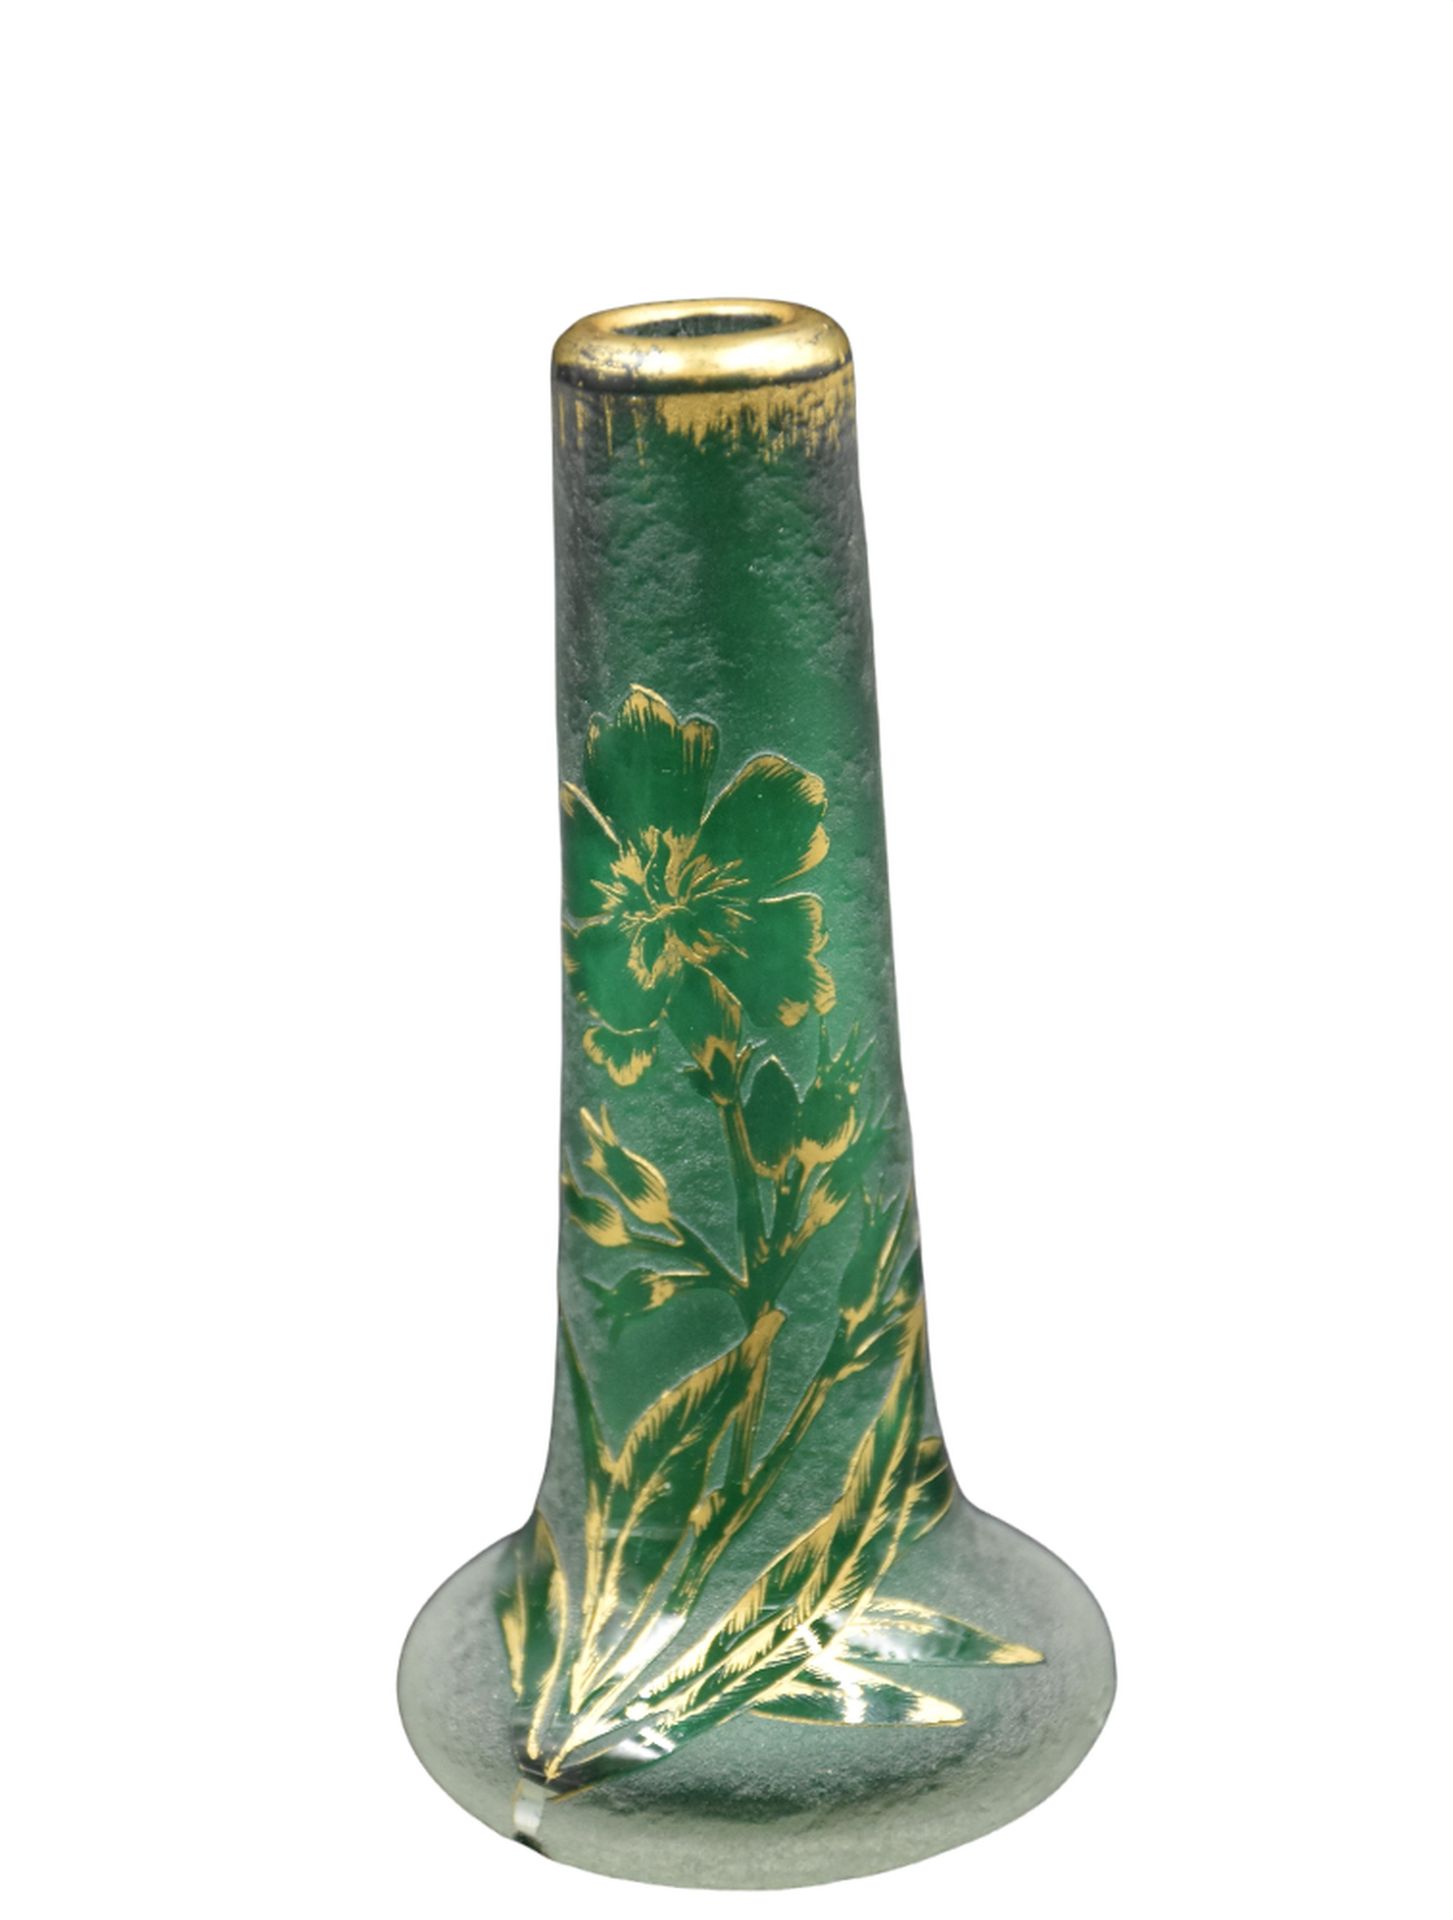 Antonin DAUM (1864-1930) 安东尼-道姆（1864-1930）。小型酸蚀花饰，用黄金强化的花朵。高：12厘米。 

荷兰：安东尼-道姆（1&hellip;